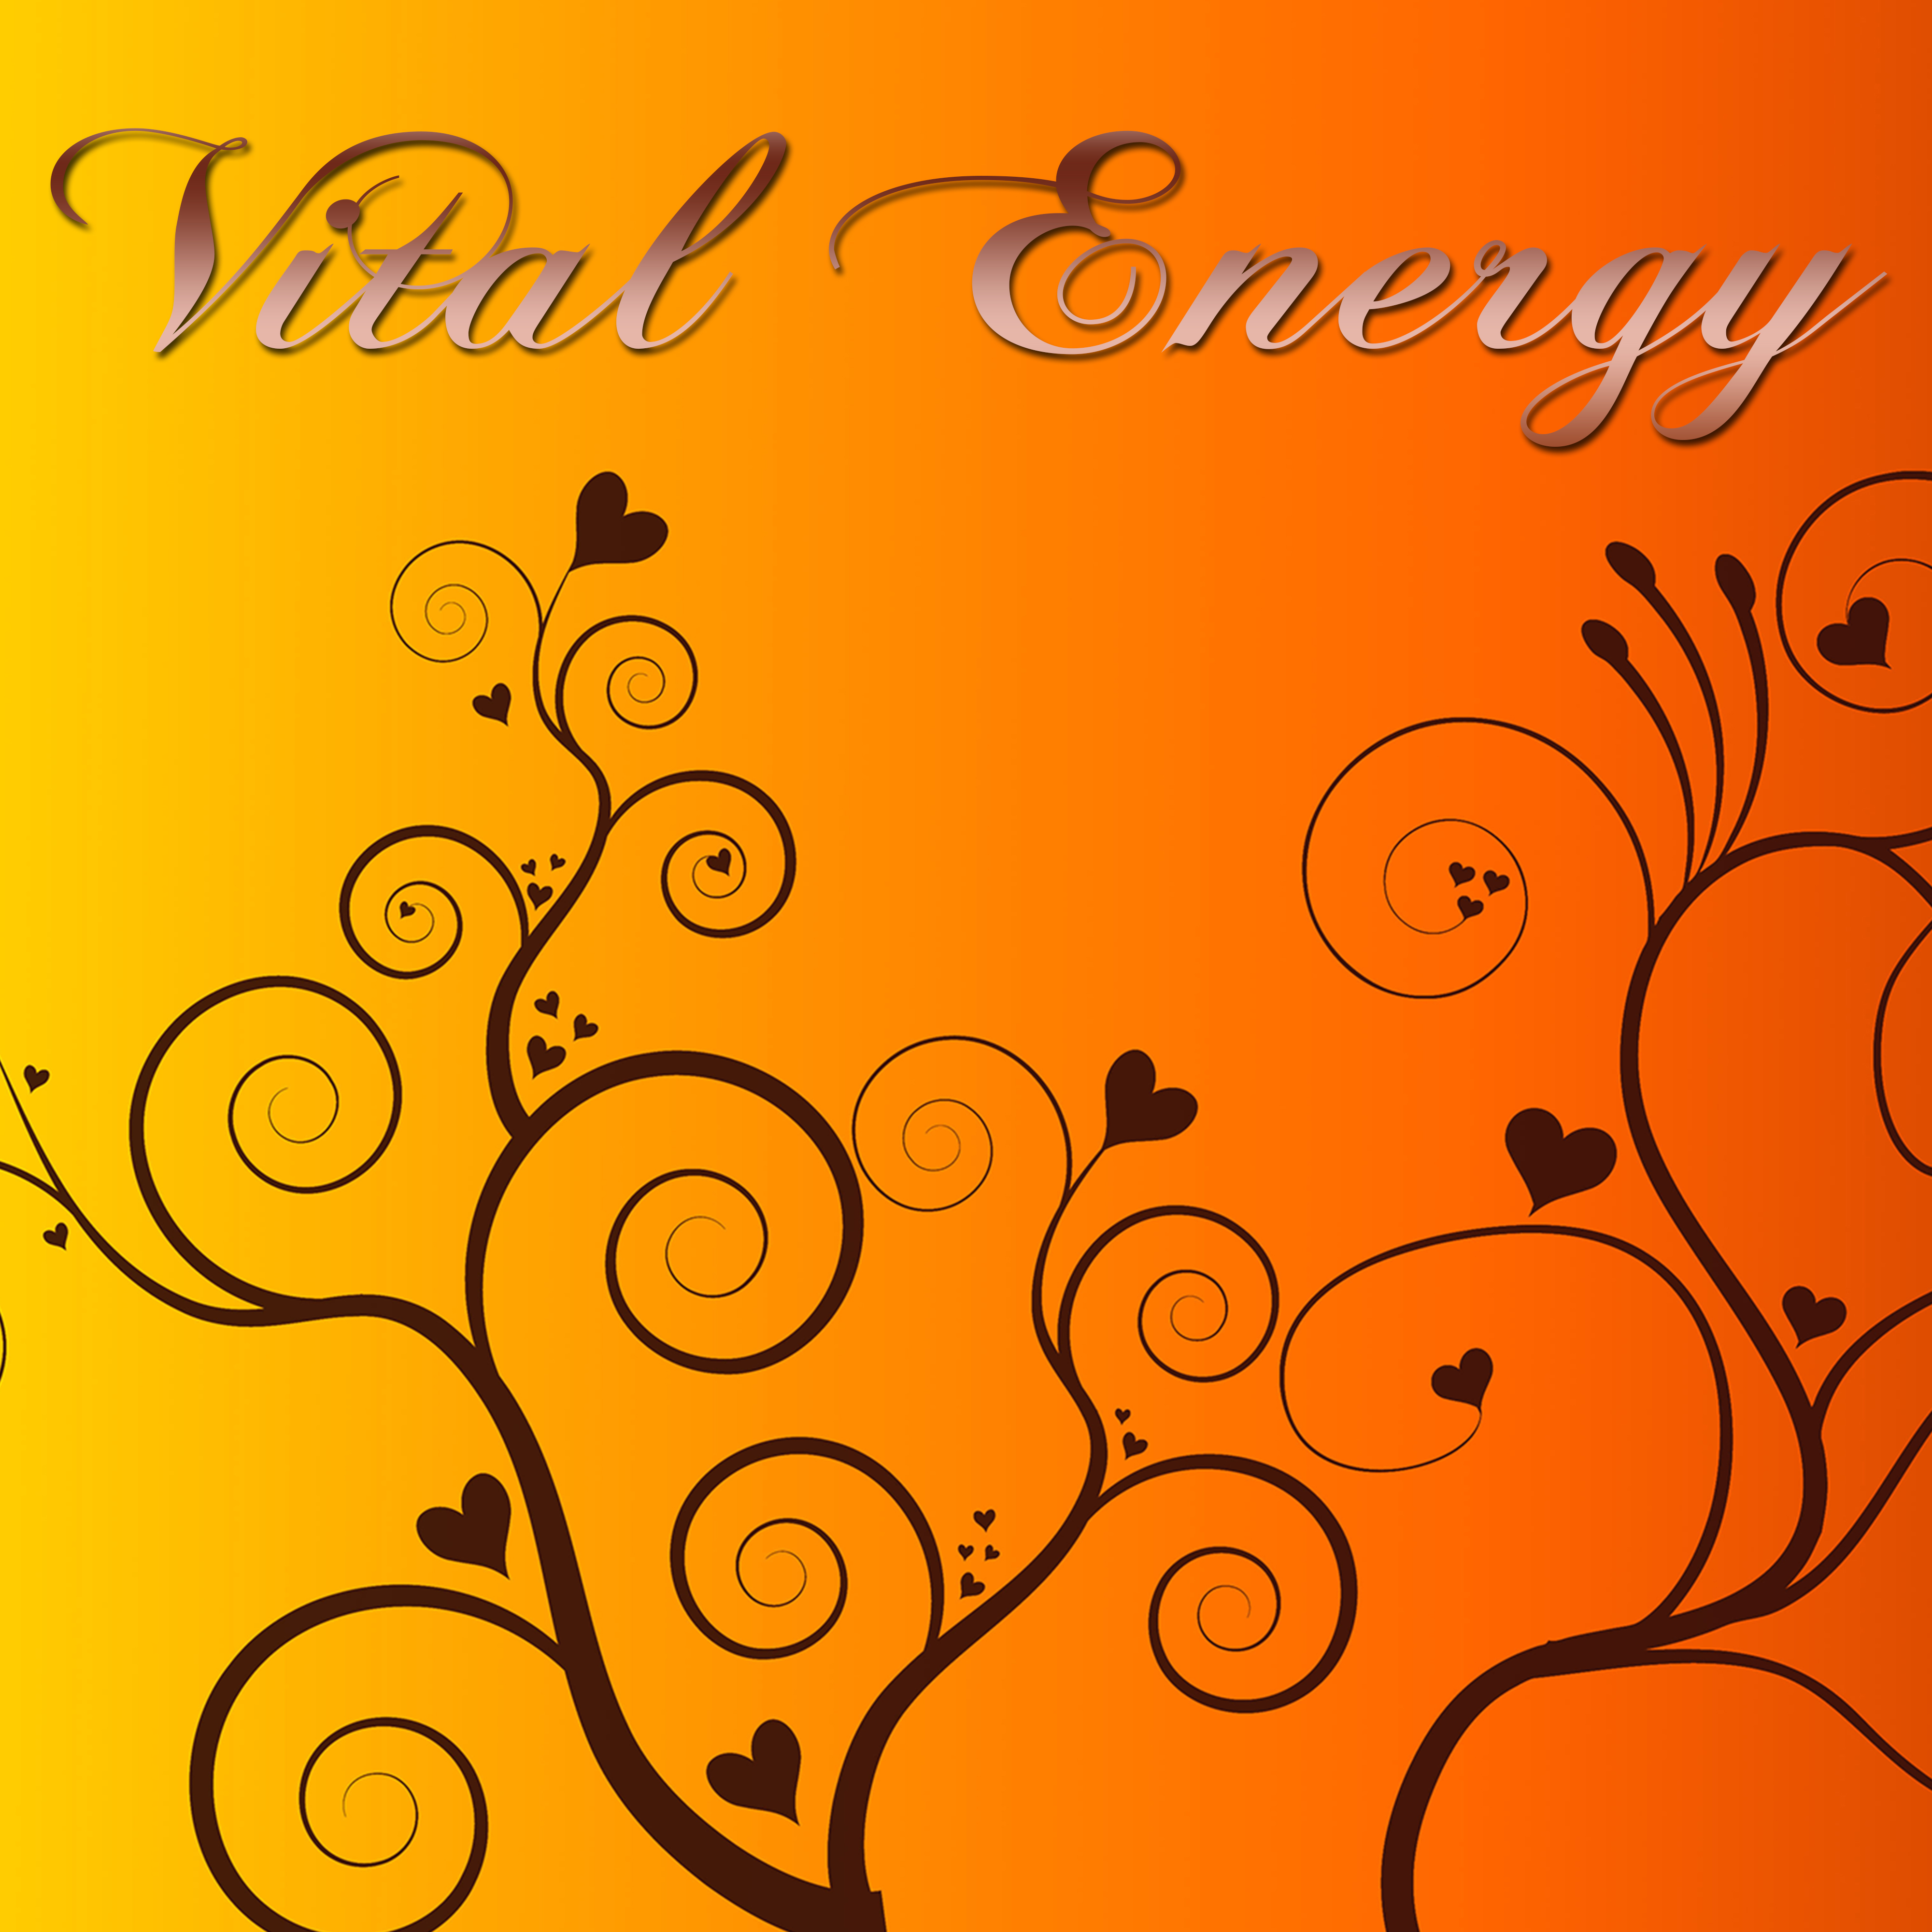 Vital Energy – Peaceful Songs for Awakening, Yoga, Meditation, Tai Chi Chuan & Kundalini Yoga